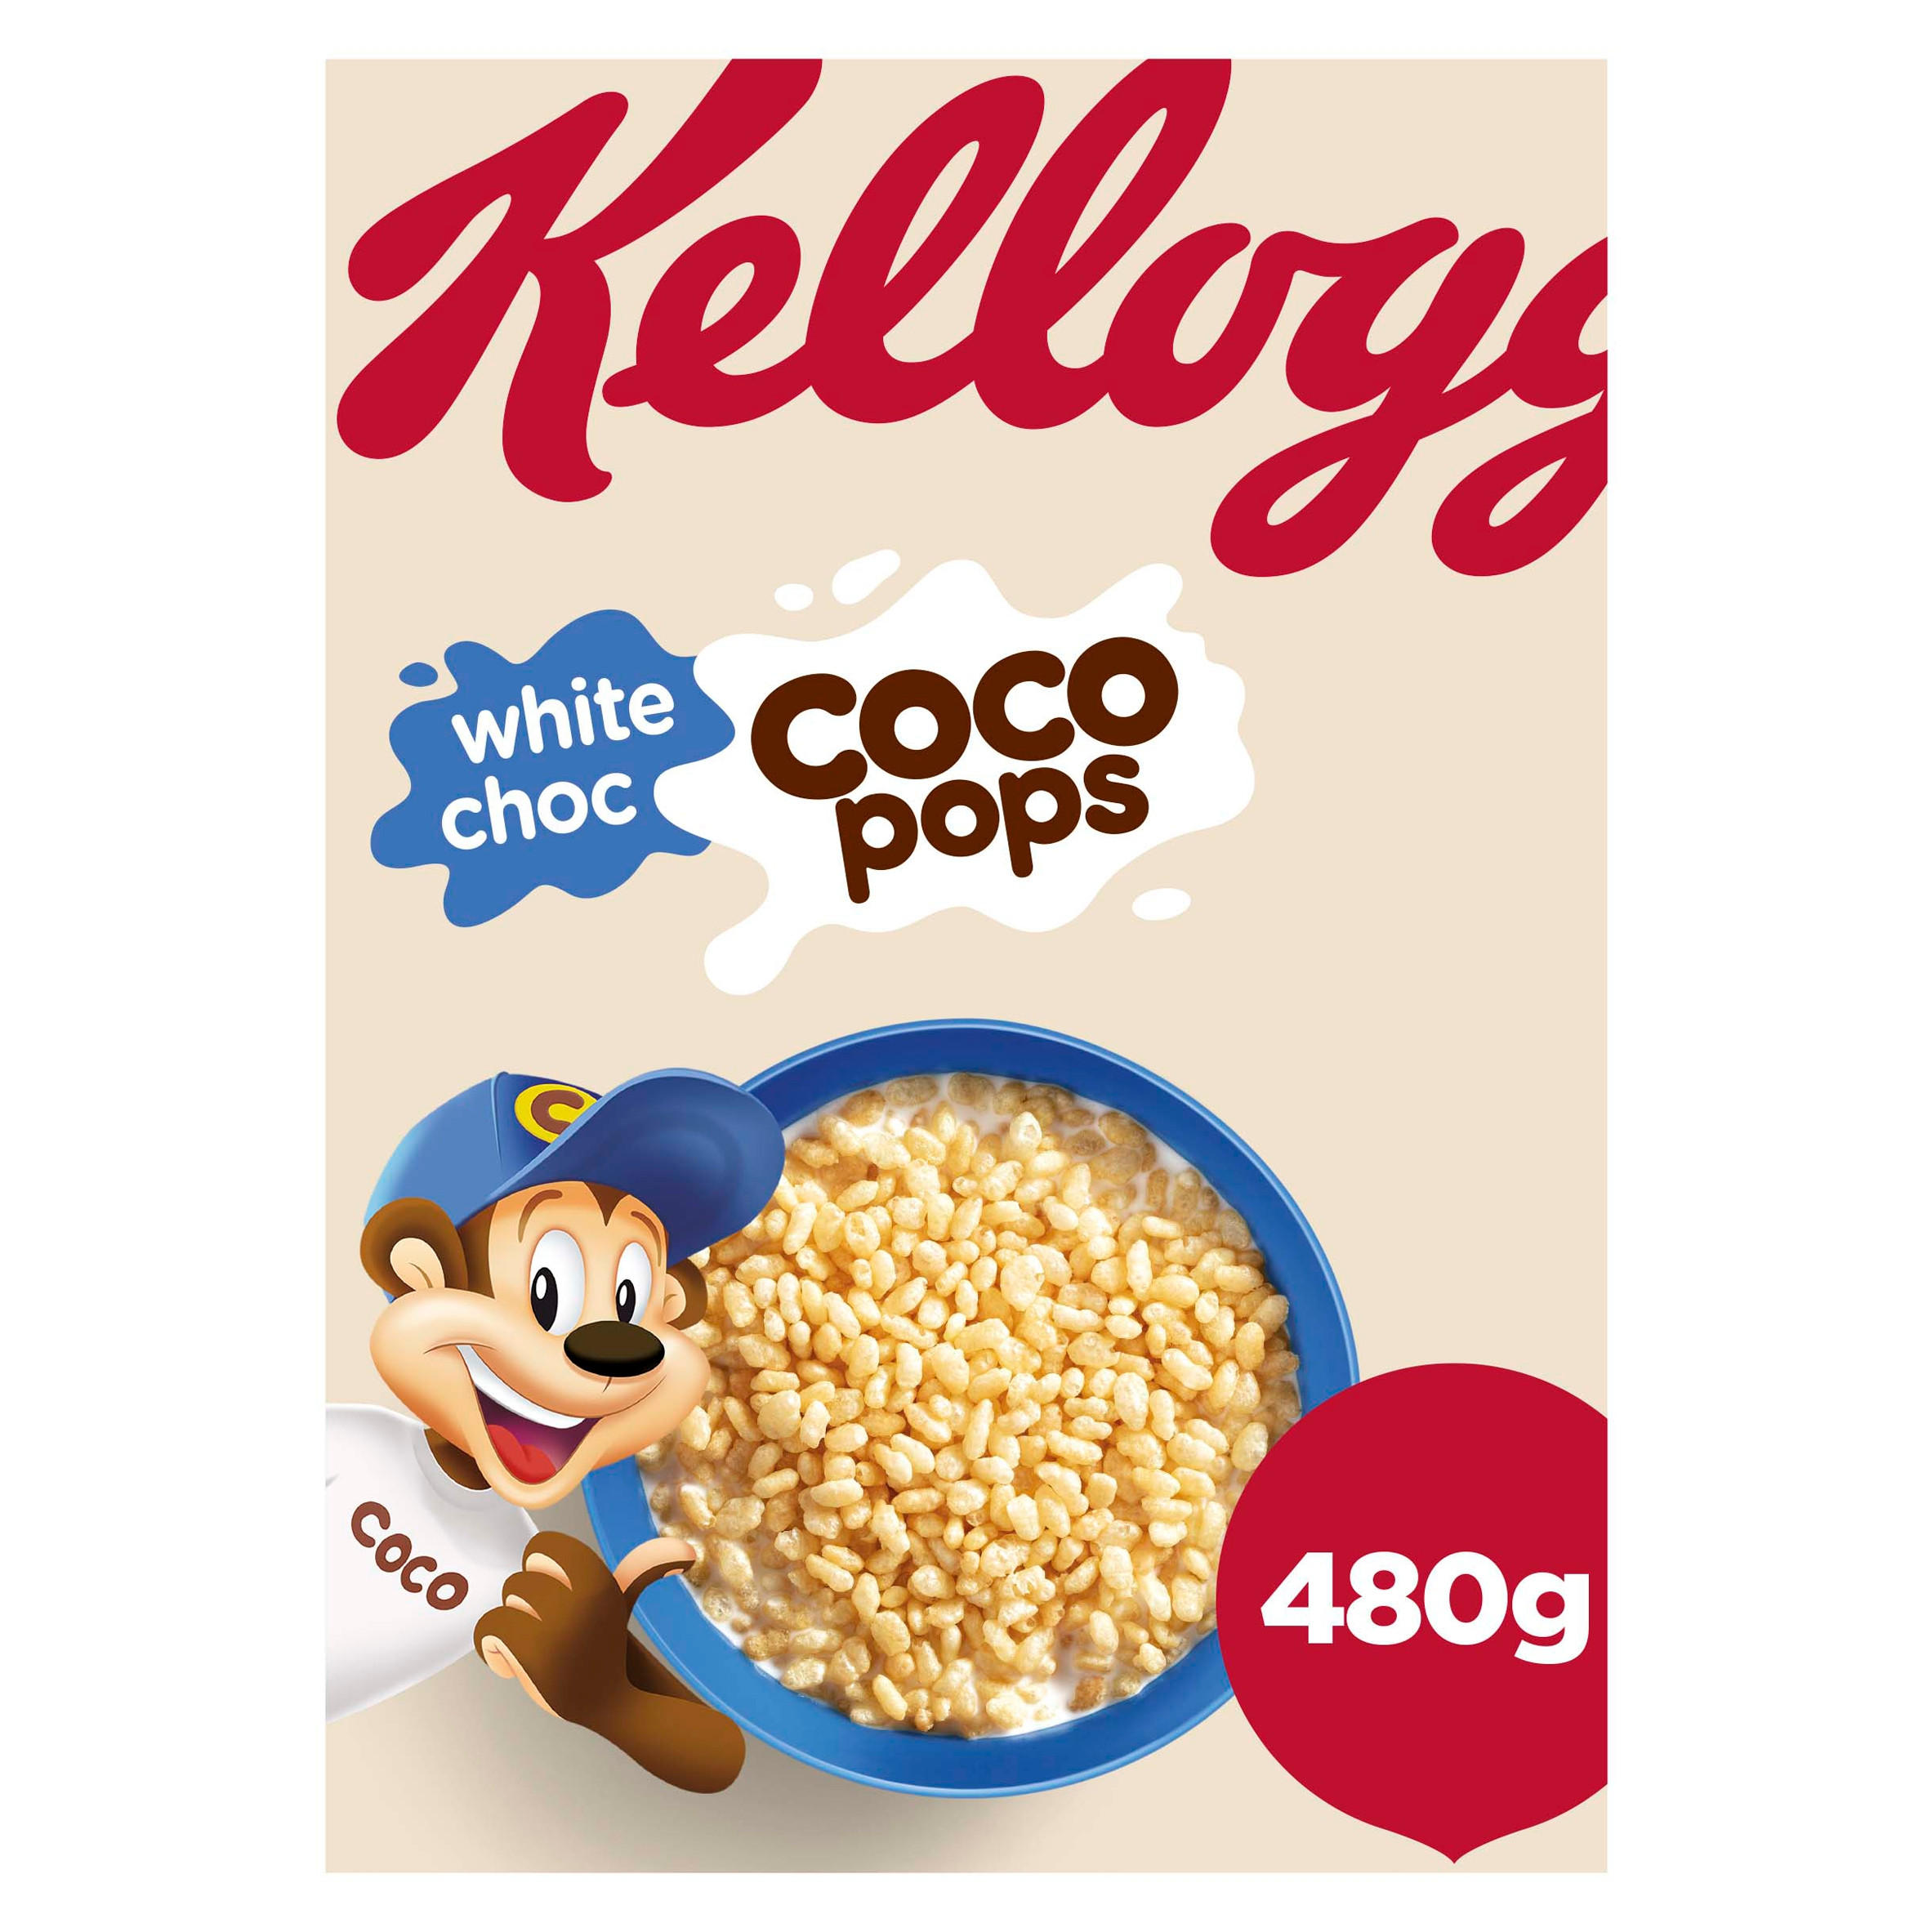 Kellogg's White Choc Coco Pops Cereal 480g